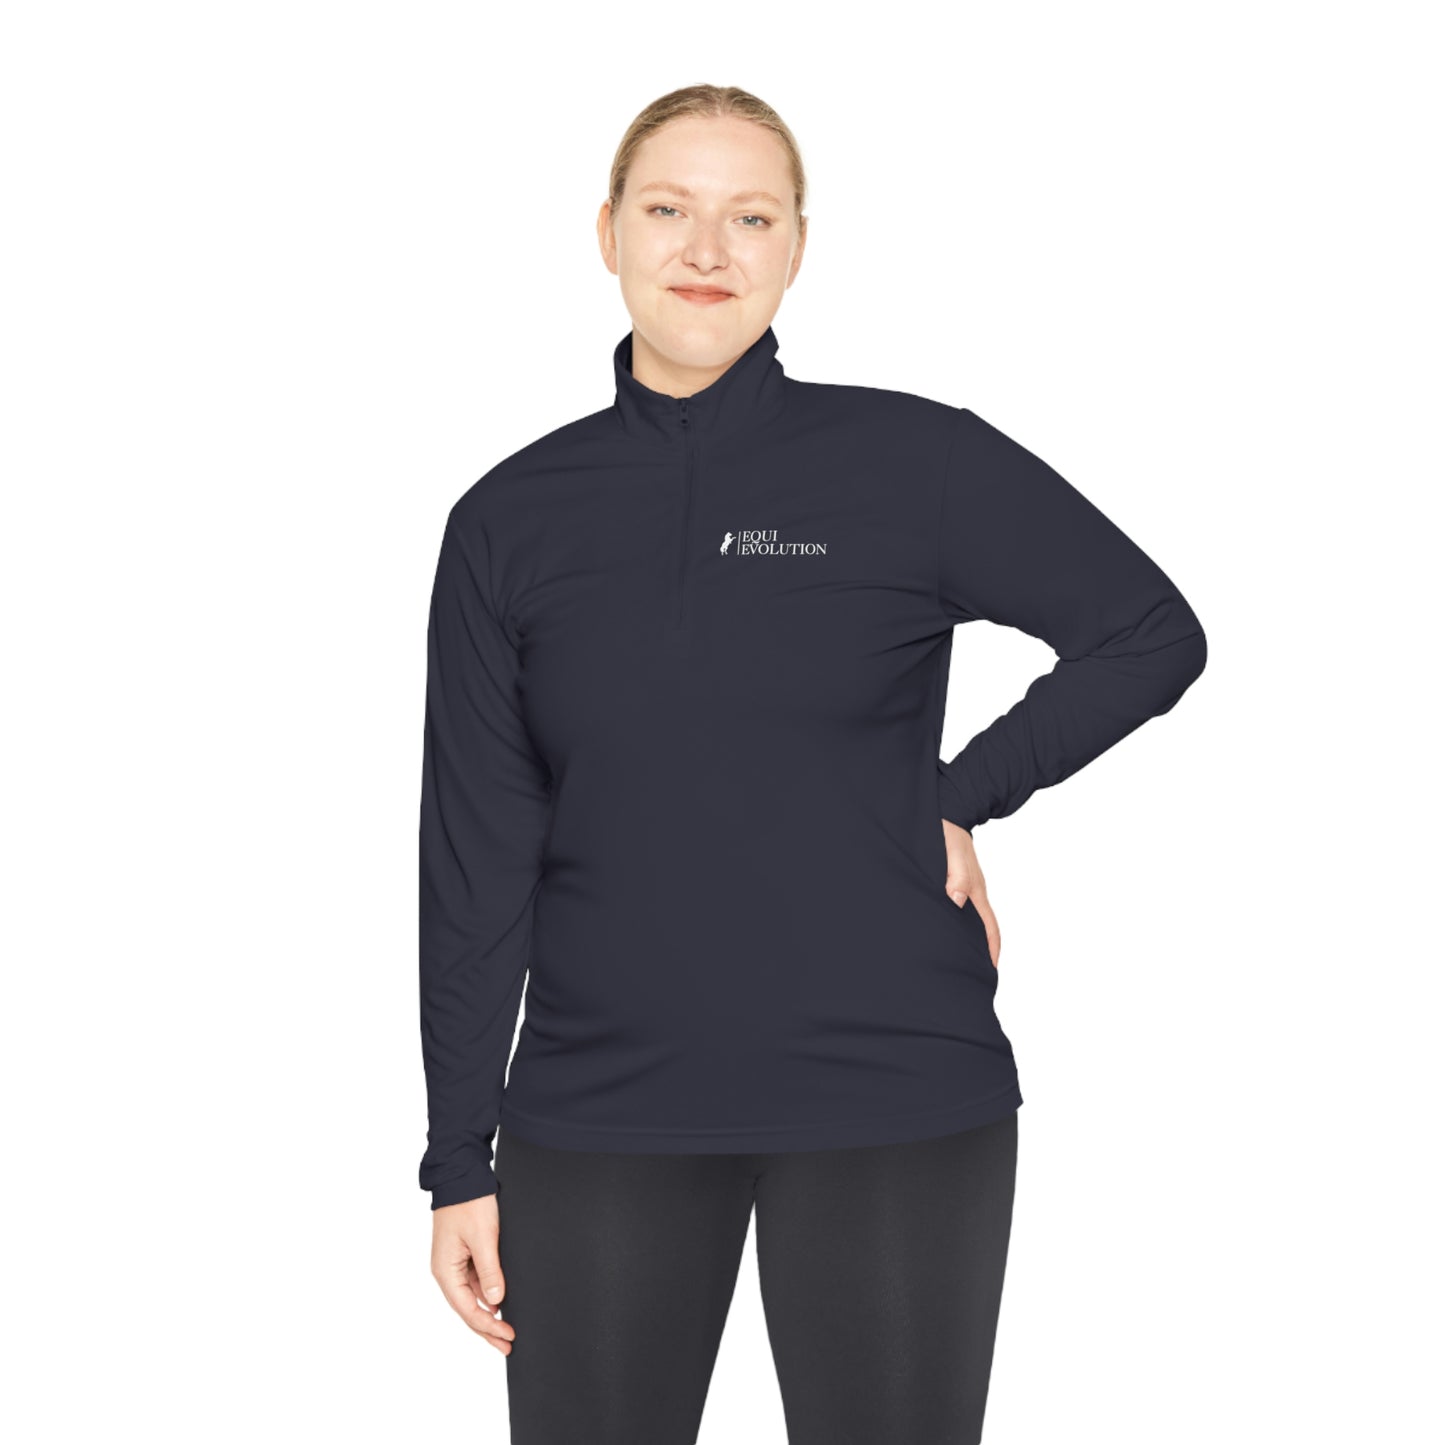 Sun Shirt: Unisex Quarter-Zip Pullover